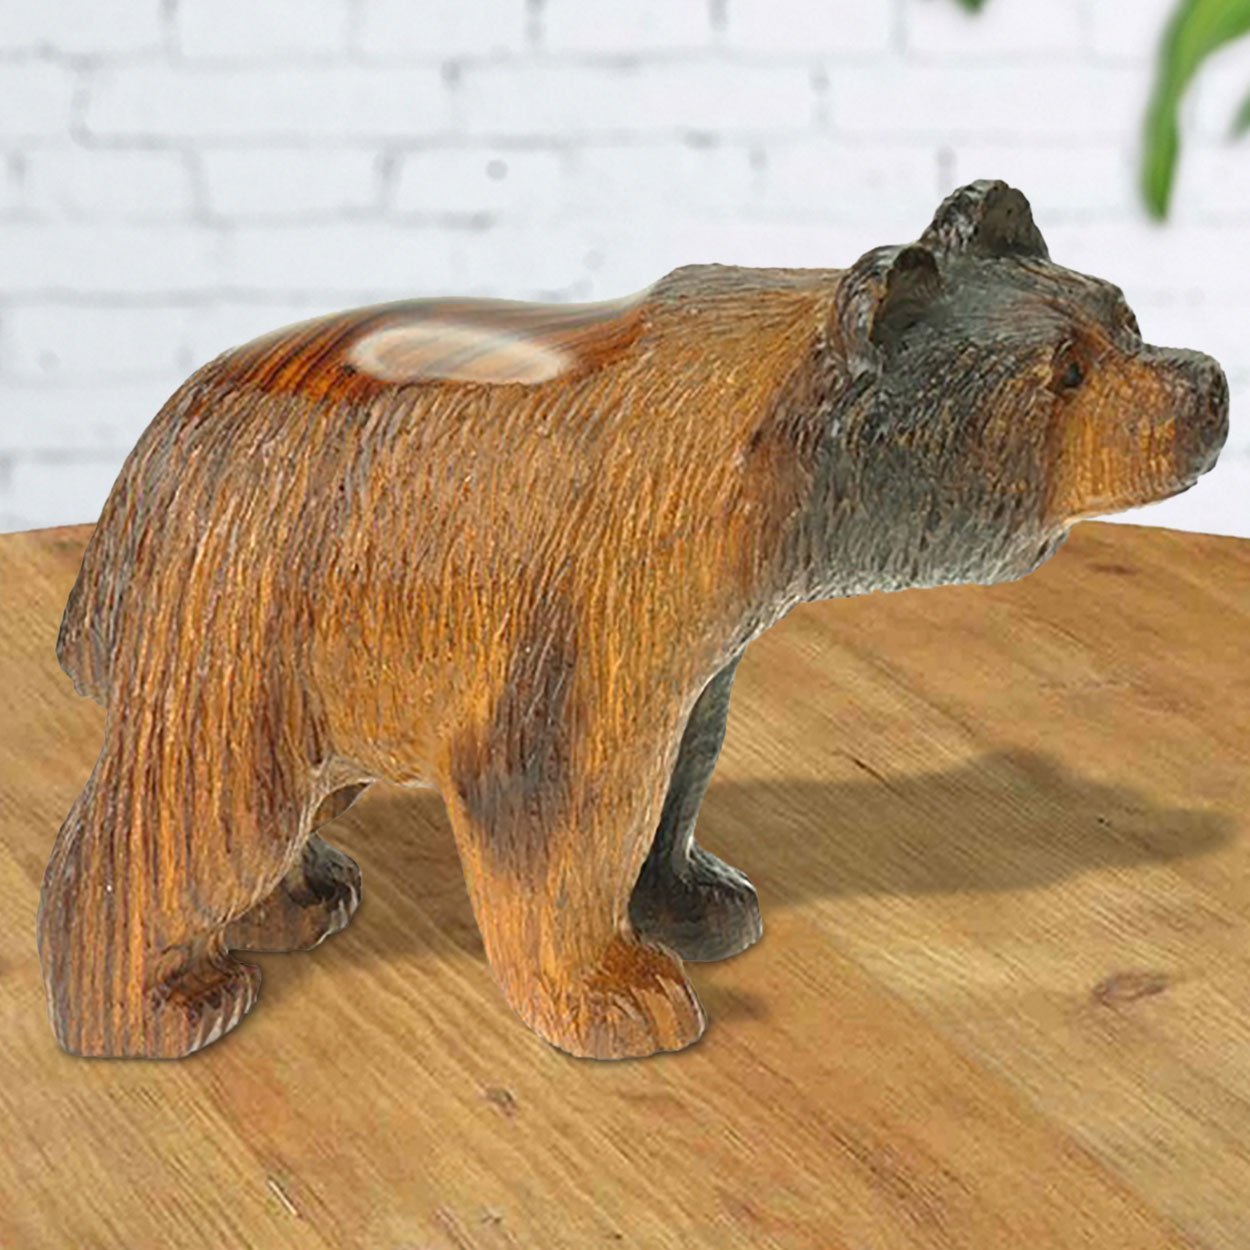 172105 - 5in Long Black Bear Ironwood Carving